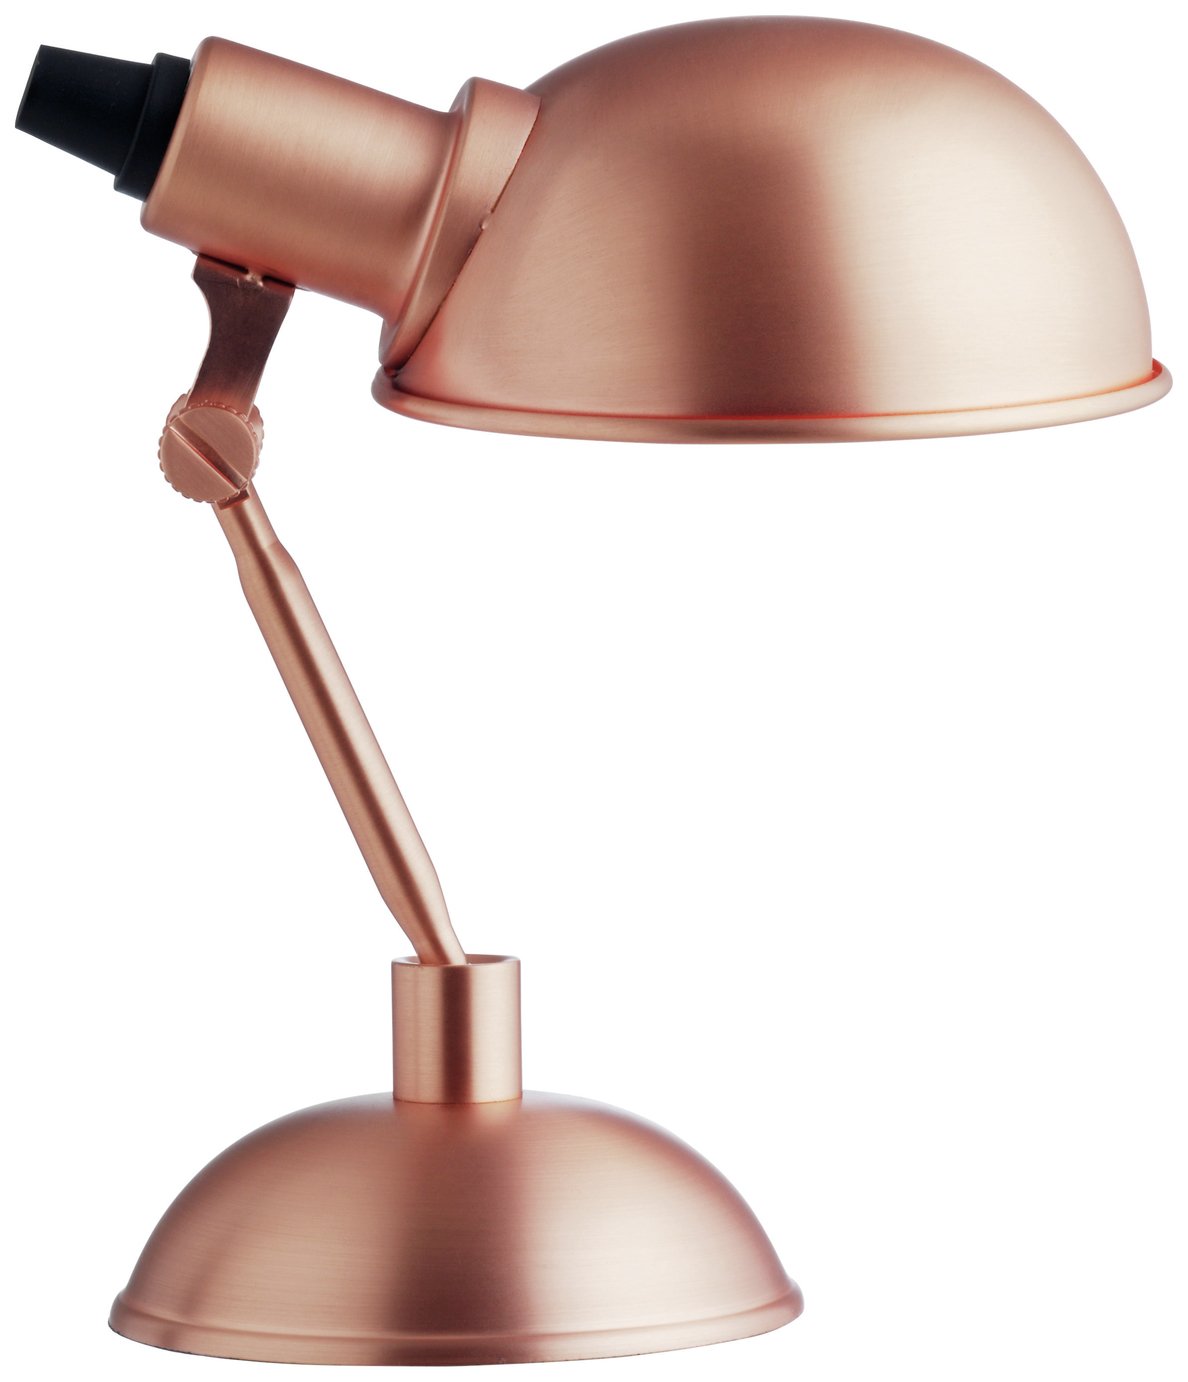 Habitat Tommy UK Copper Desk Lamp review